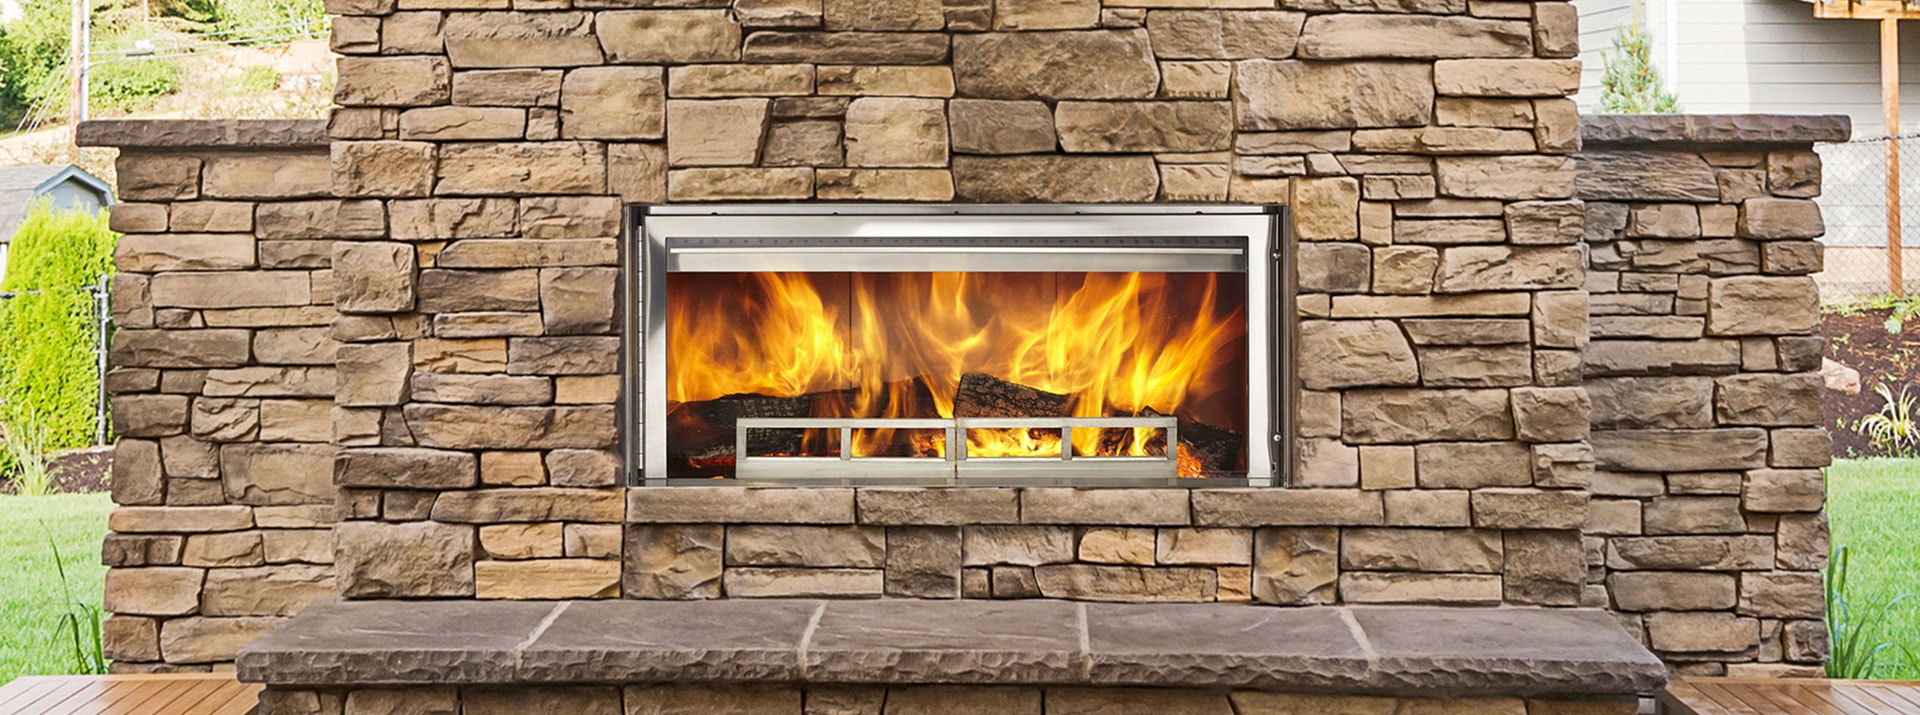 Monessen Fireplace Parts Inspirational Bond Black Outdoor Vent Free Wood Burning Fireplace Insert